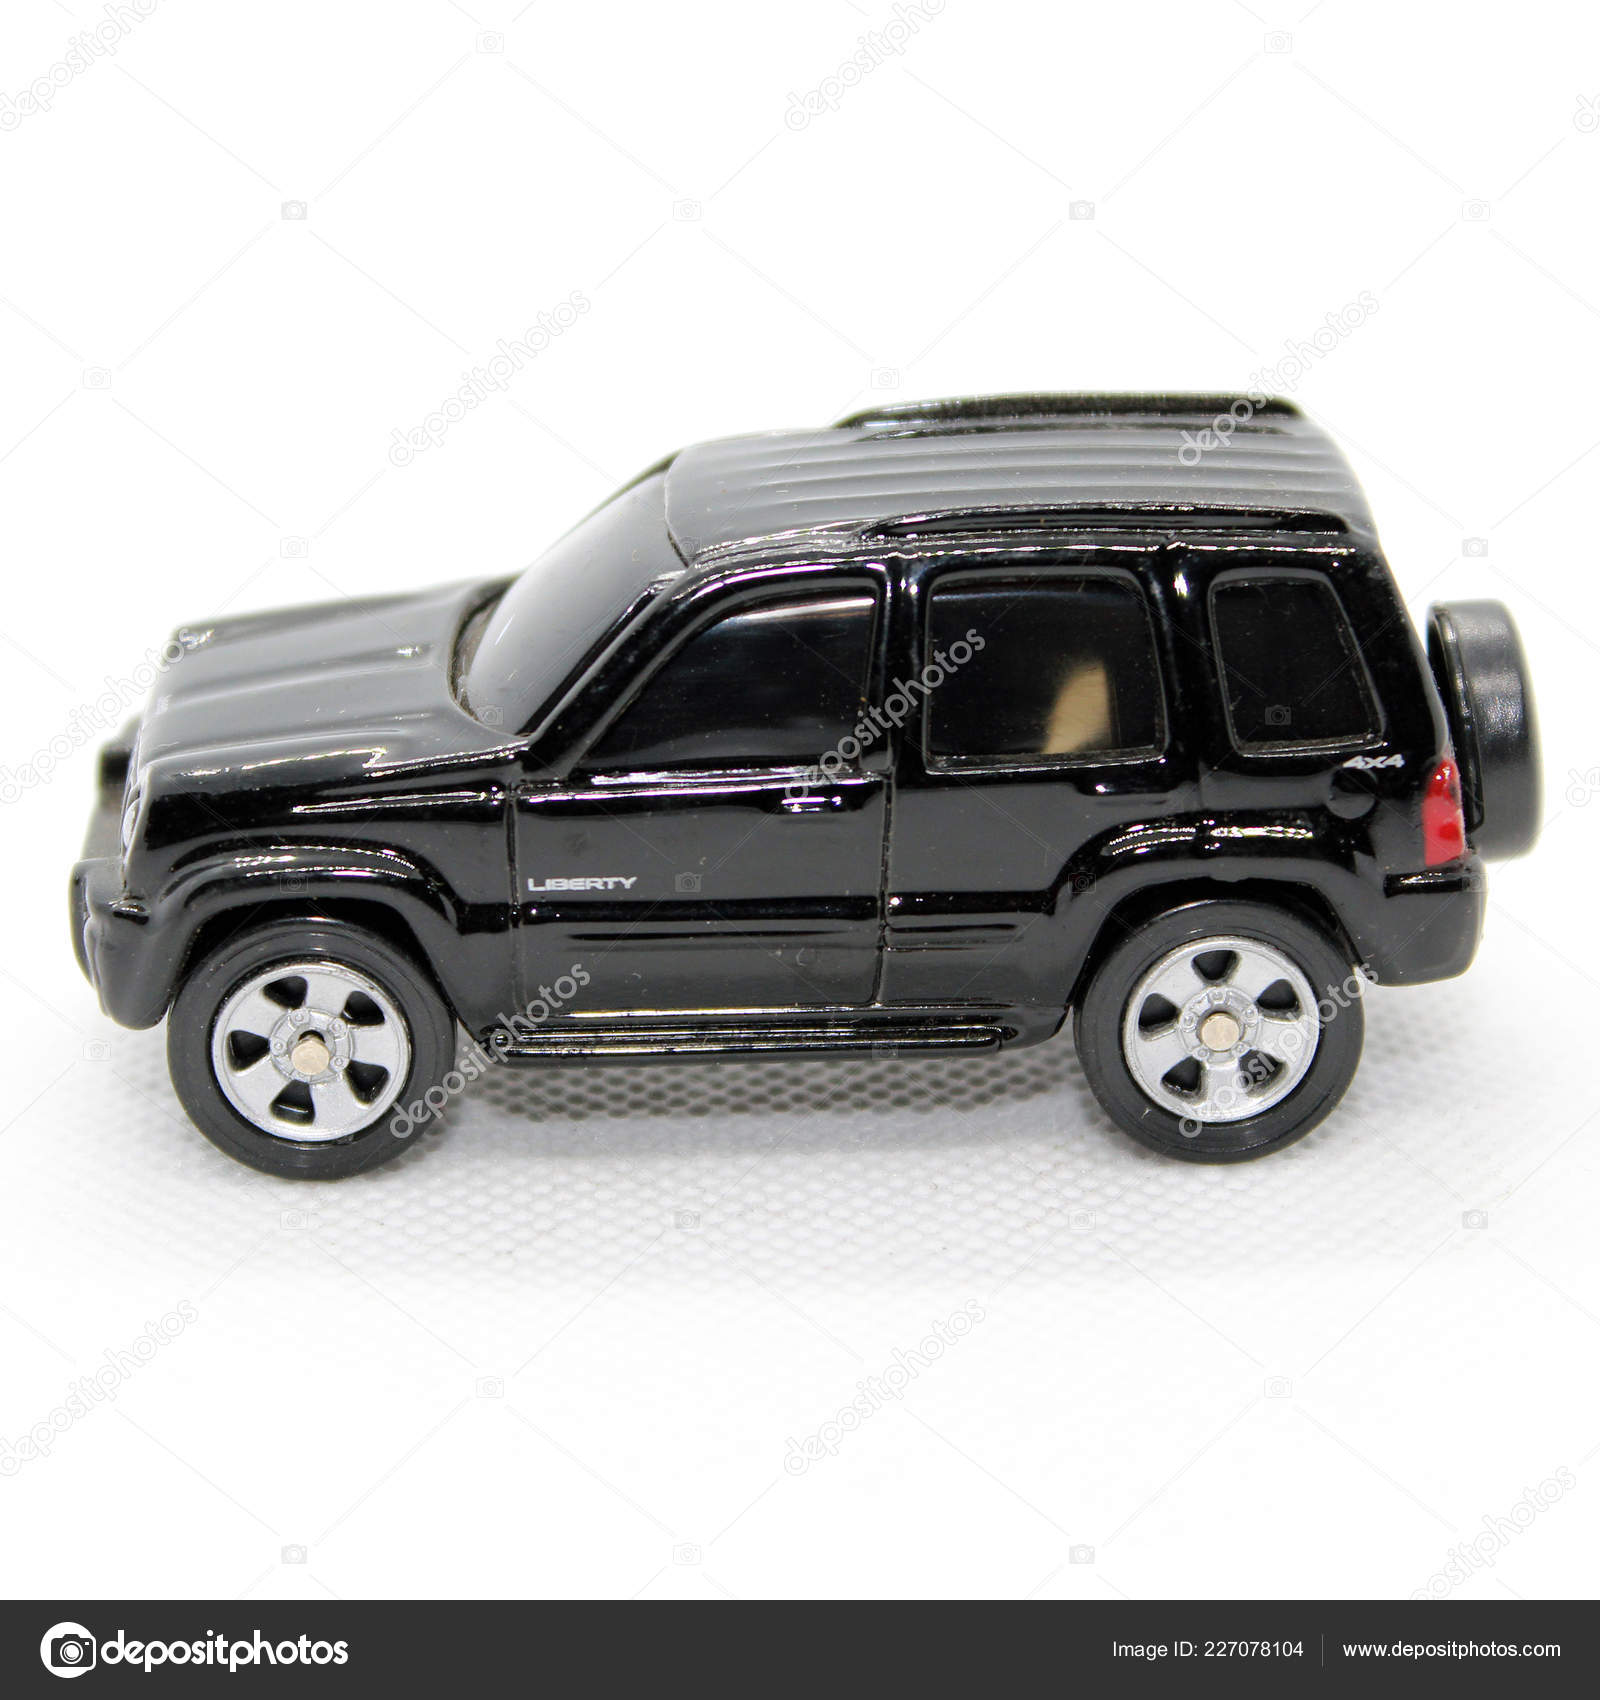 jeep liberty toy